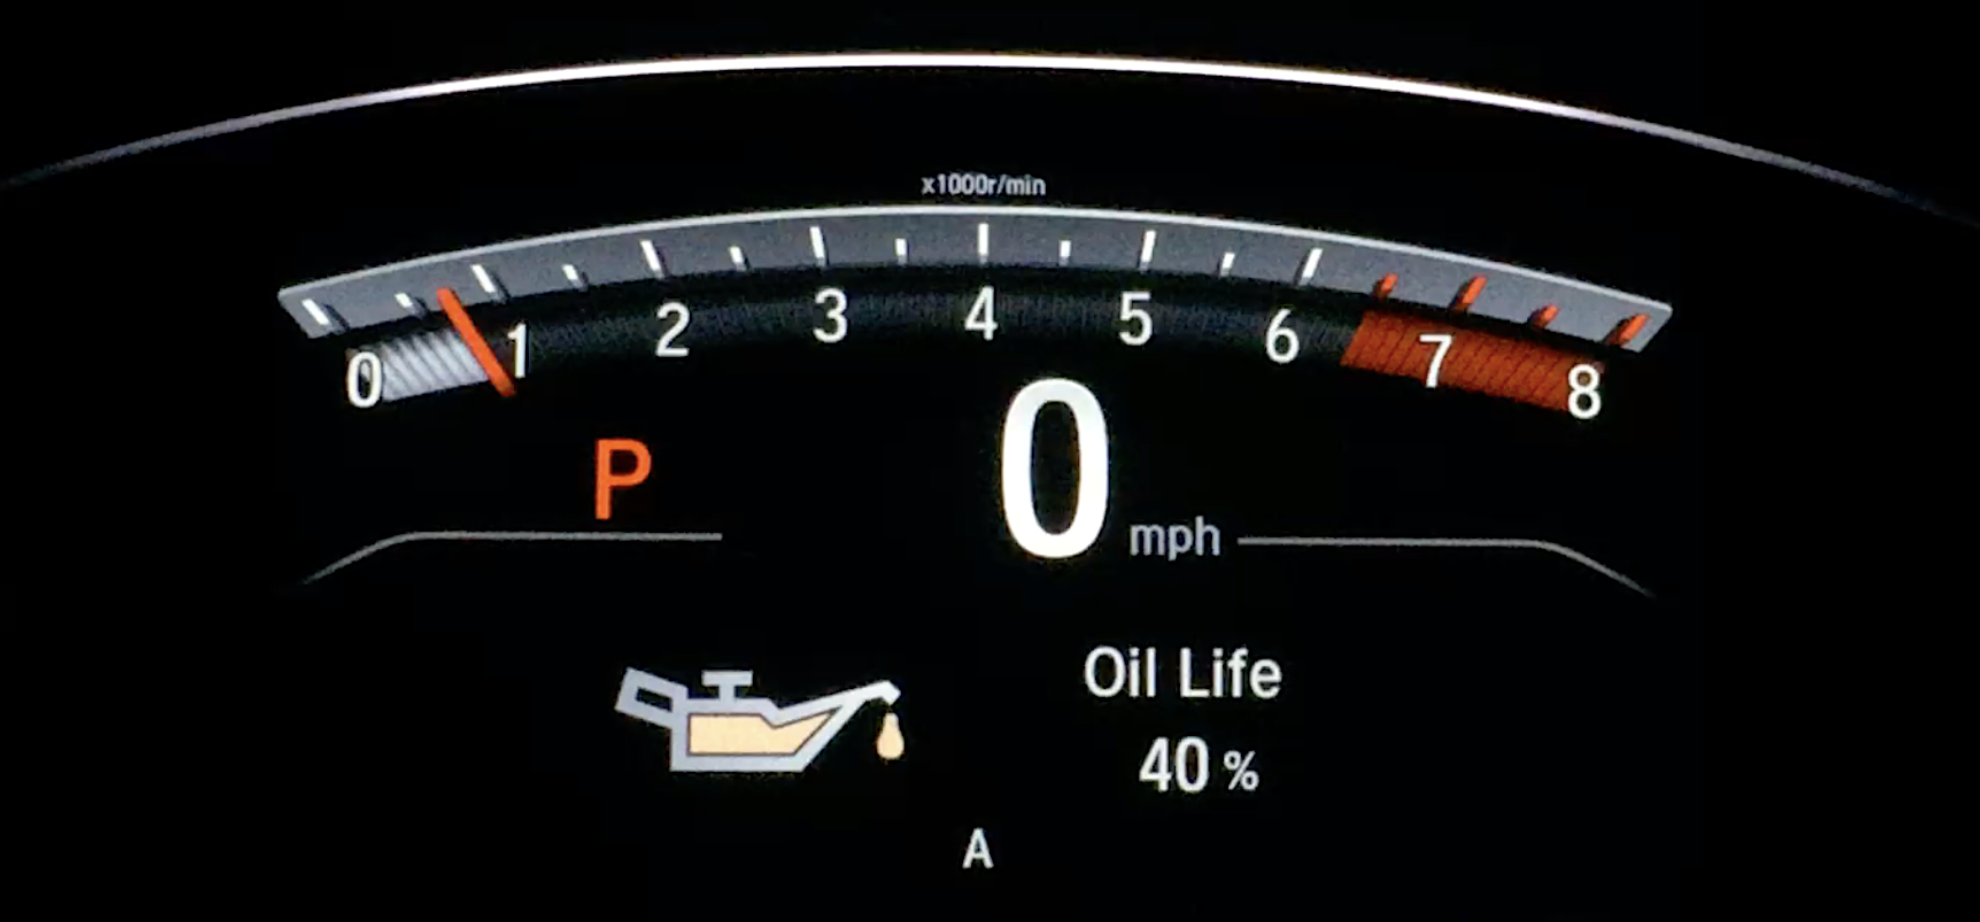 Honda Oil Life Percentages Explained